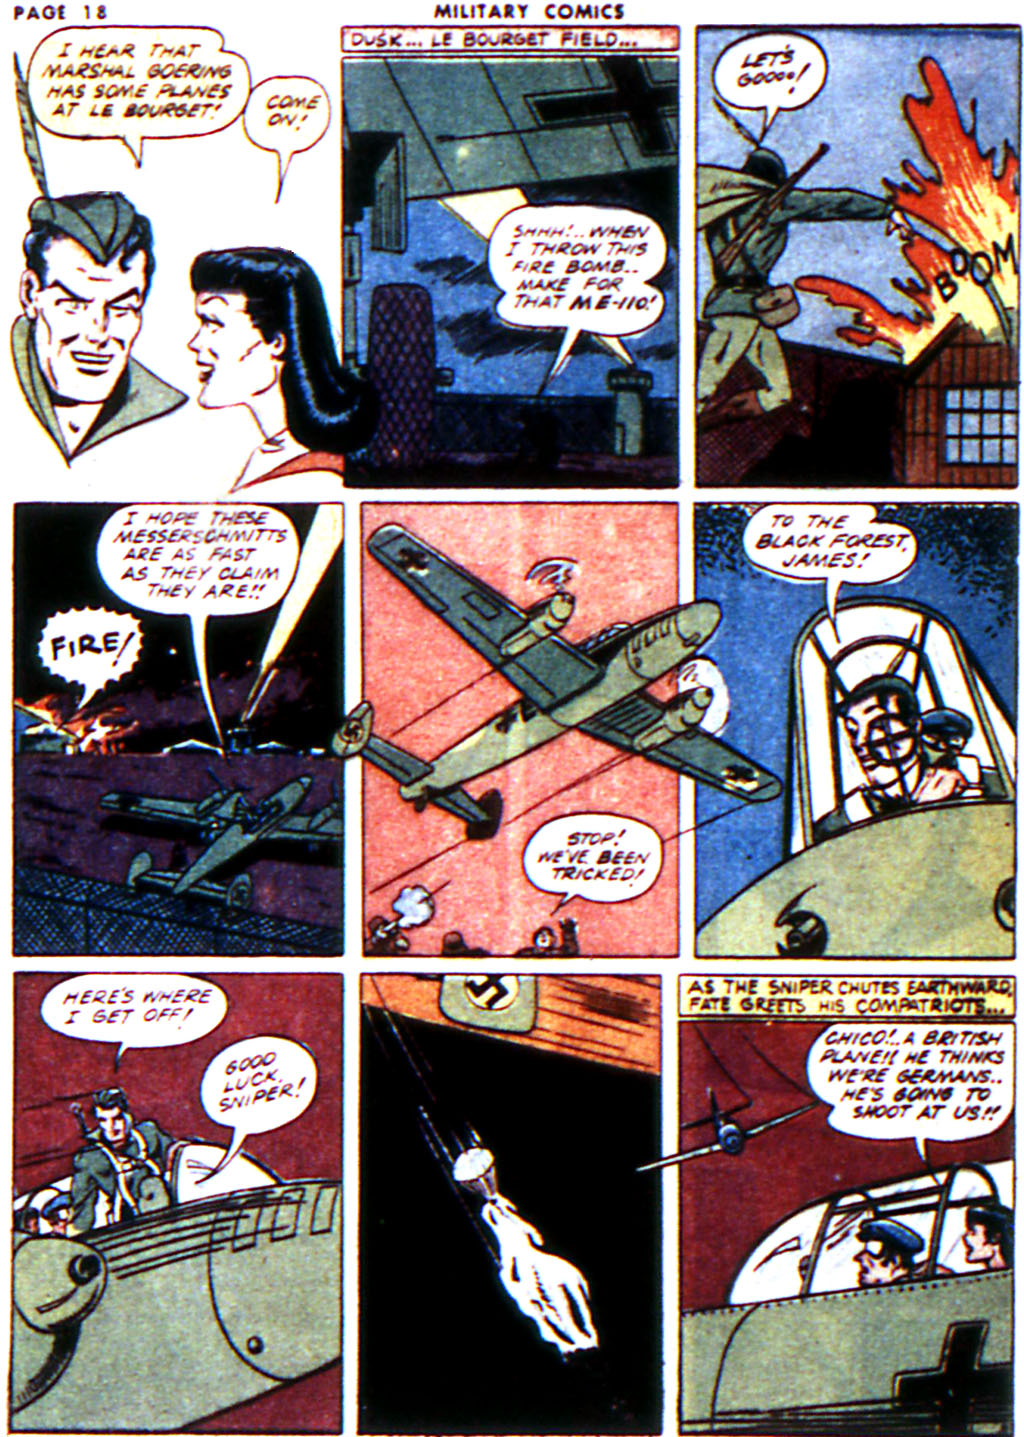 Read online Military Comics comic -  Issue #14 - 20